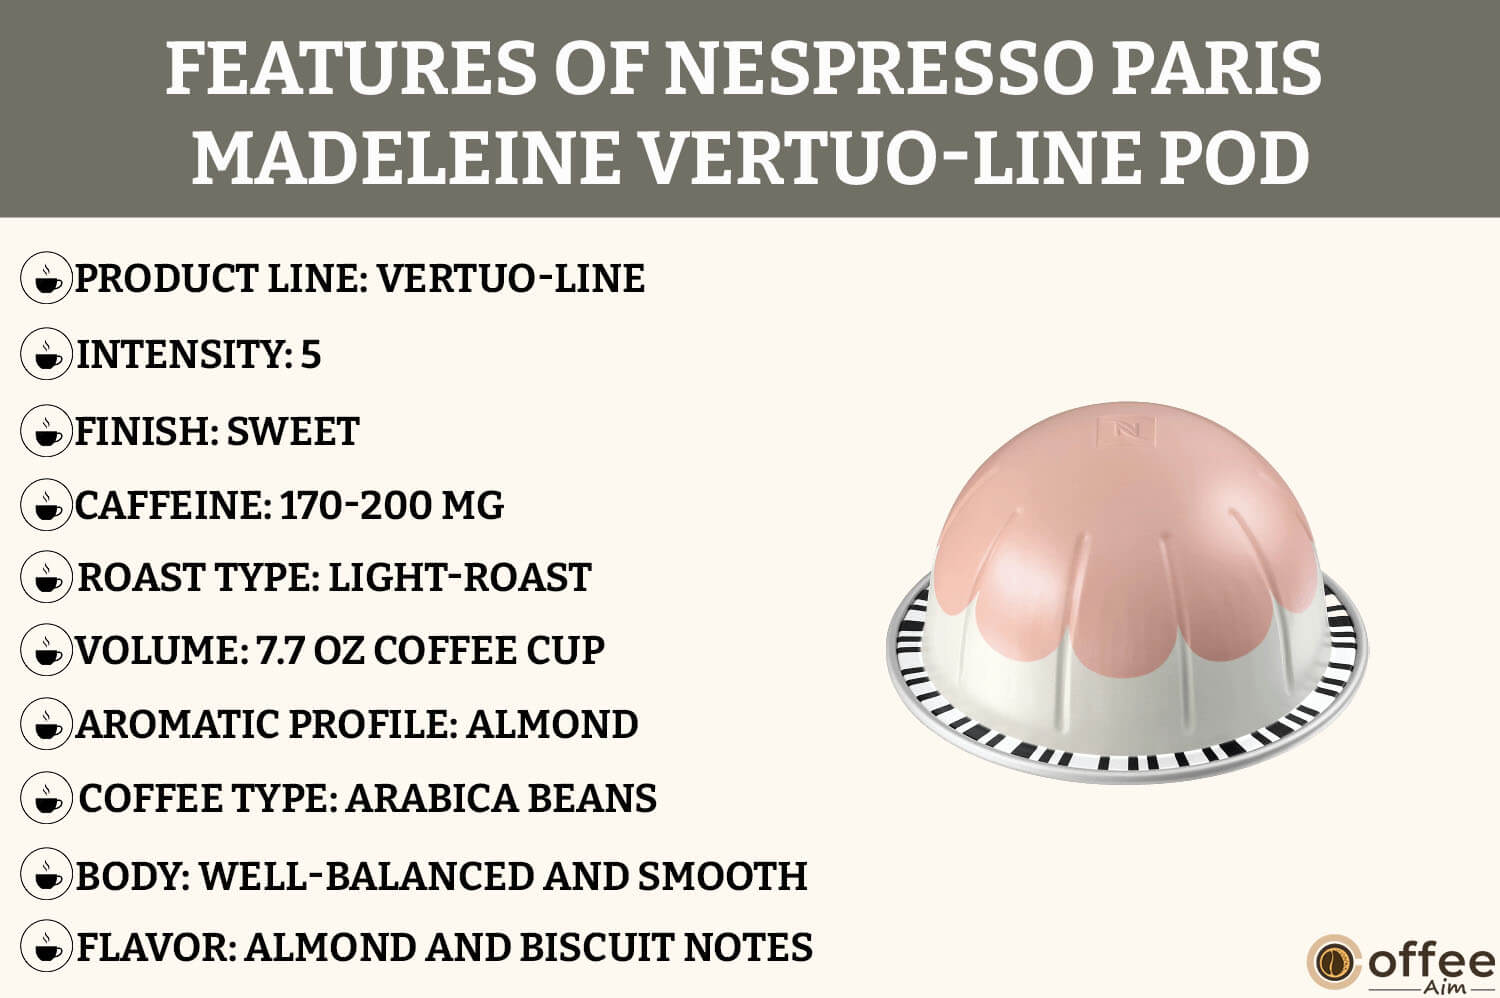 "Explore Parisian delight with Nespresso's Vertuo Pod – Paris Madeleine. Aromatic, balanced, and rich, a true coffee journey."